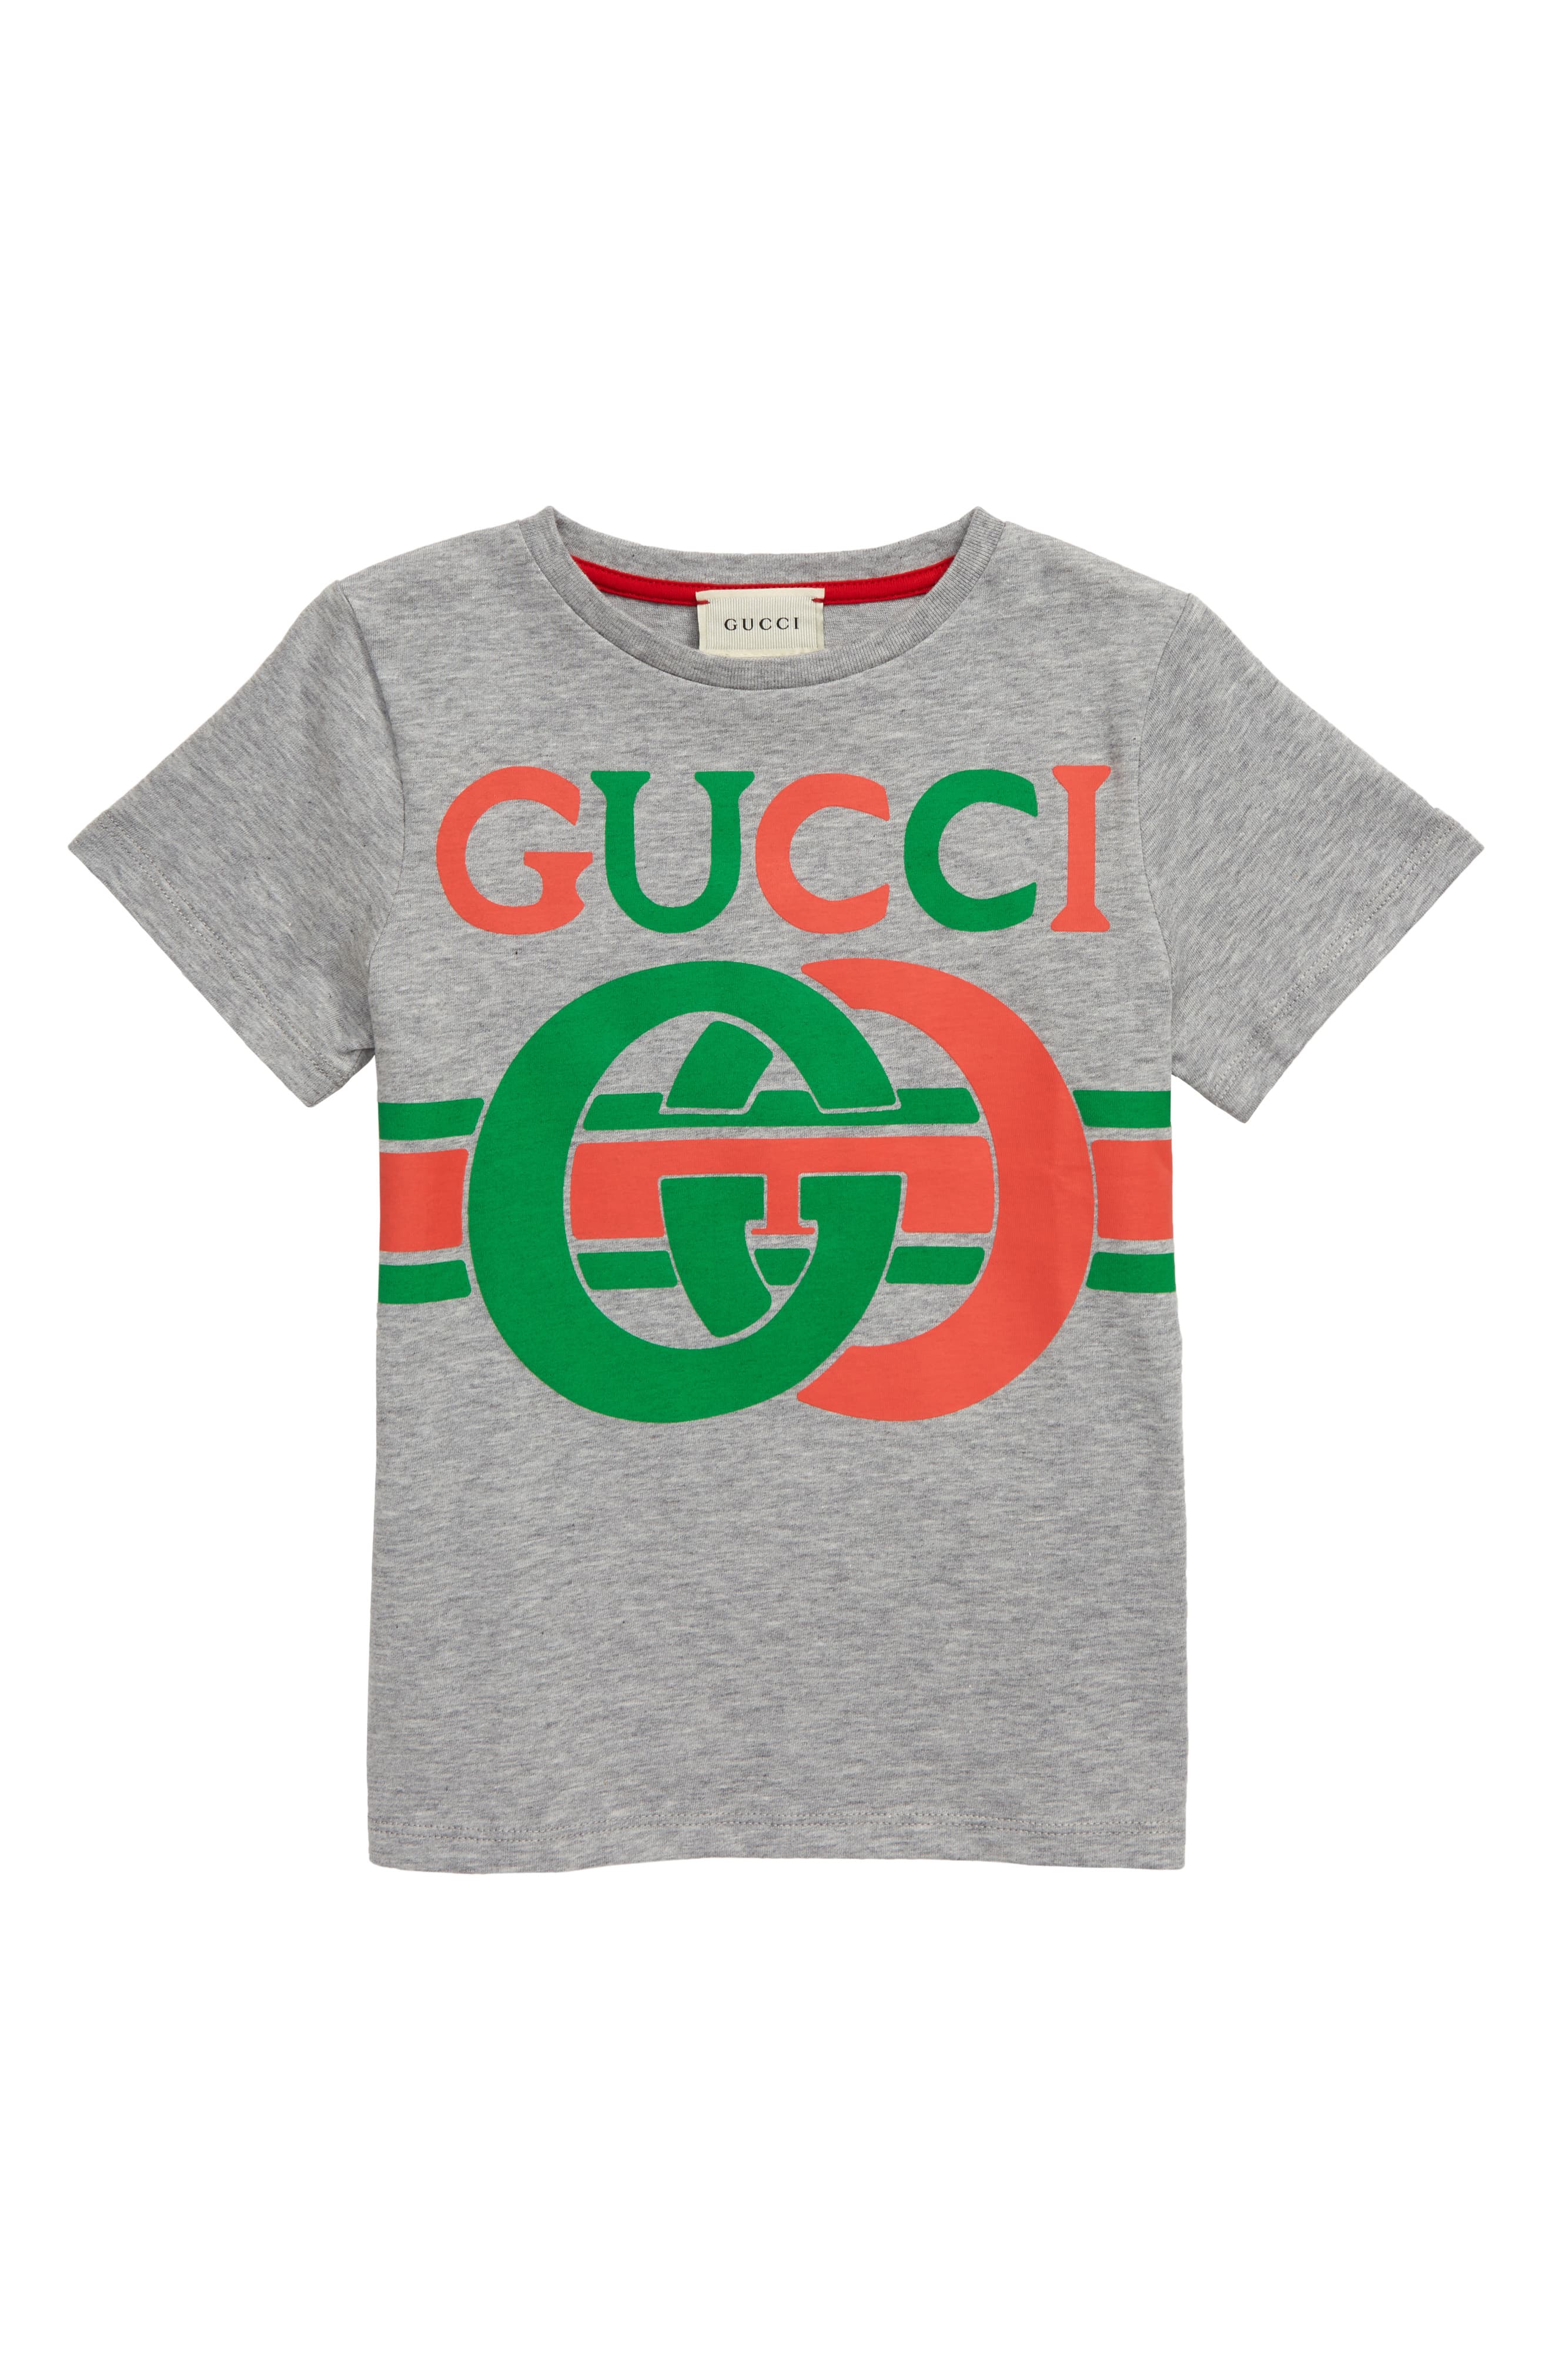 Boy’s Gucci Logo Graphic T-Shirt | The Fashionisto